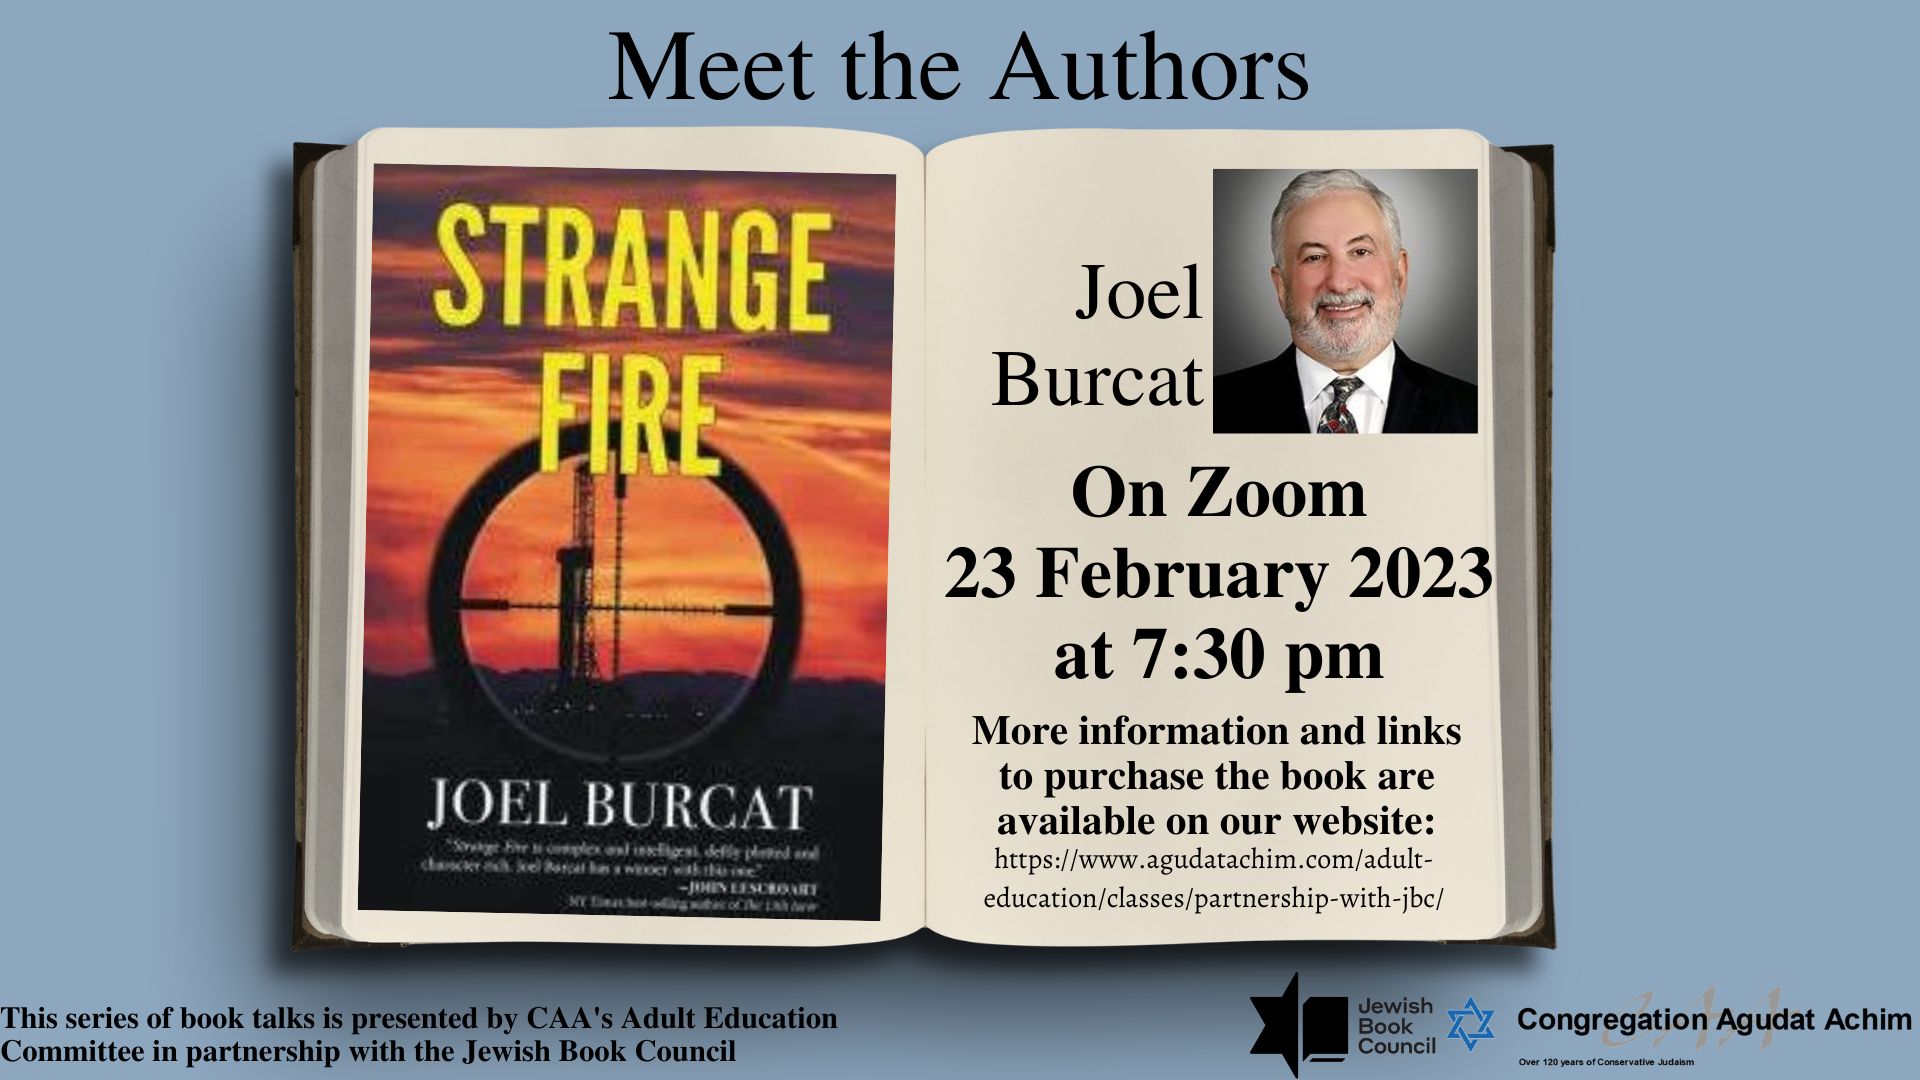 STRANGE FIRE with Joel Burcat